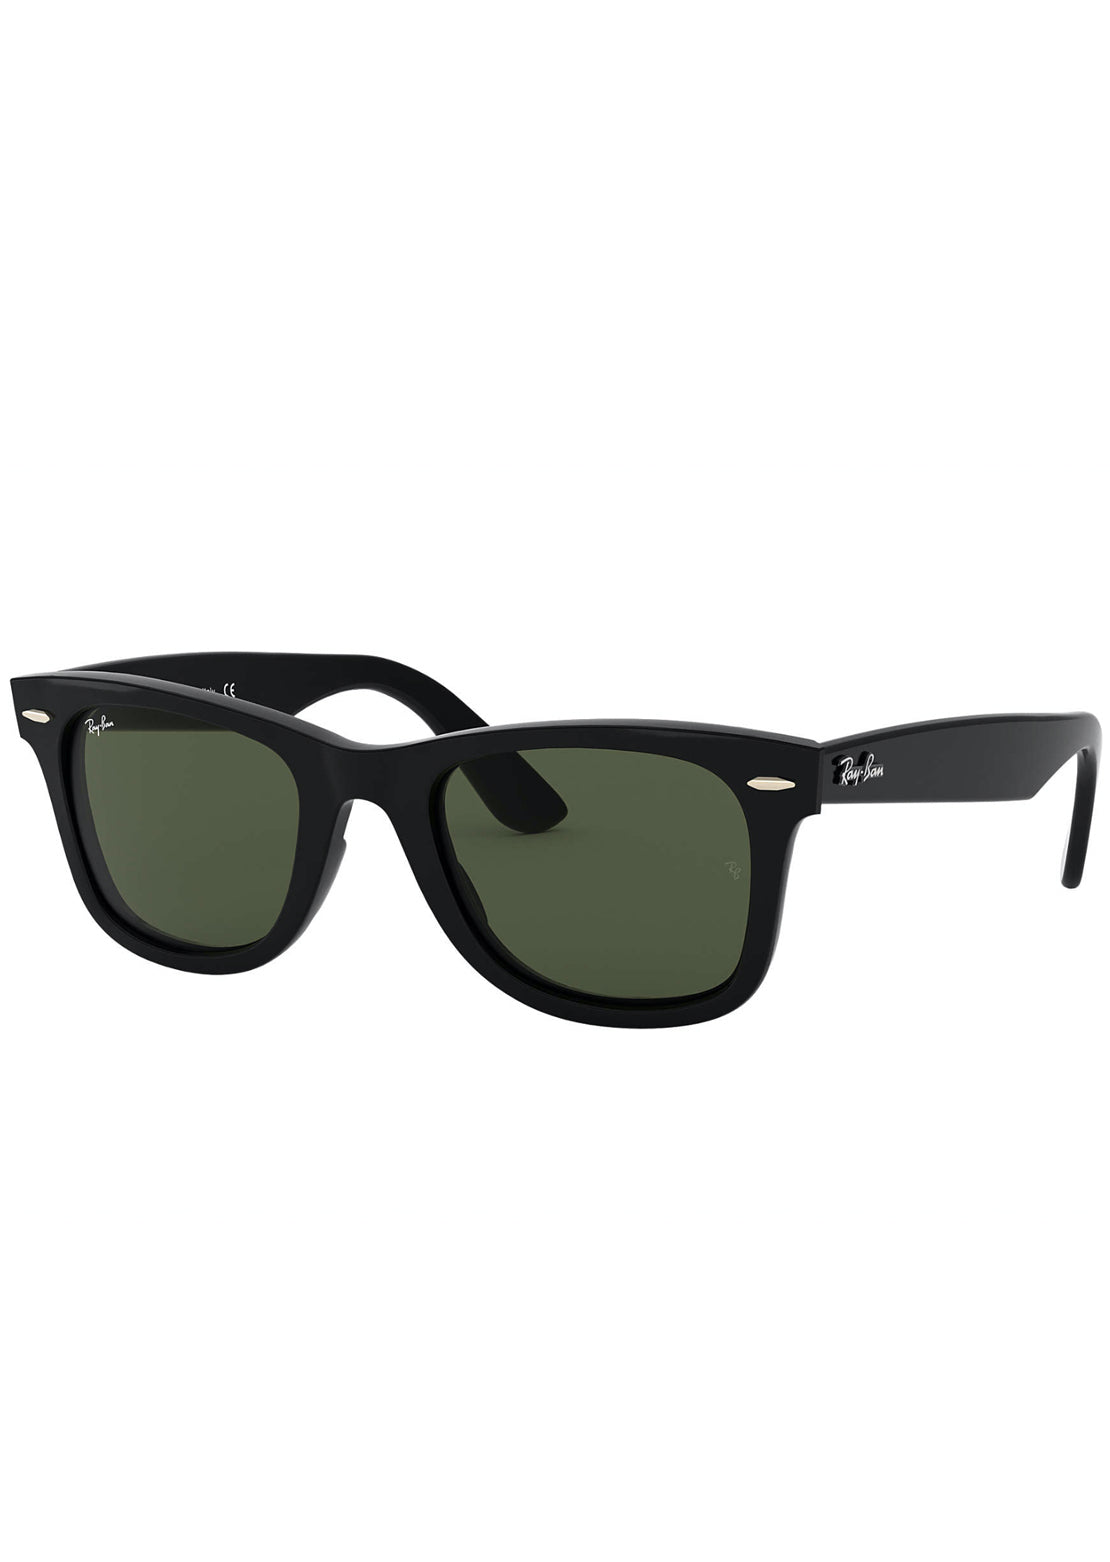 Ray-Ban Wayfarer Ease RB4340 Sunglasses Injected Black/Green Classic G-15